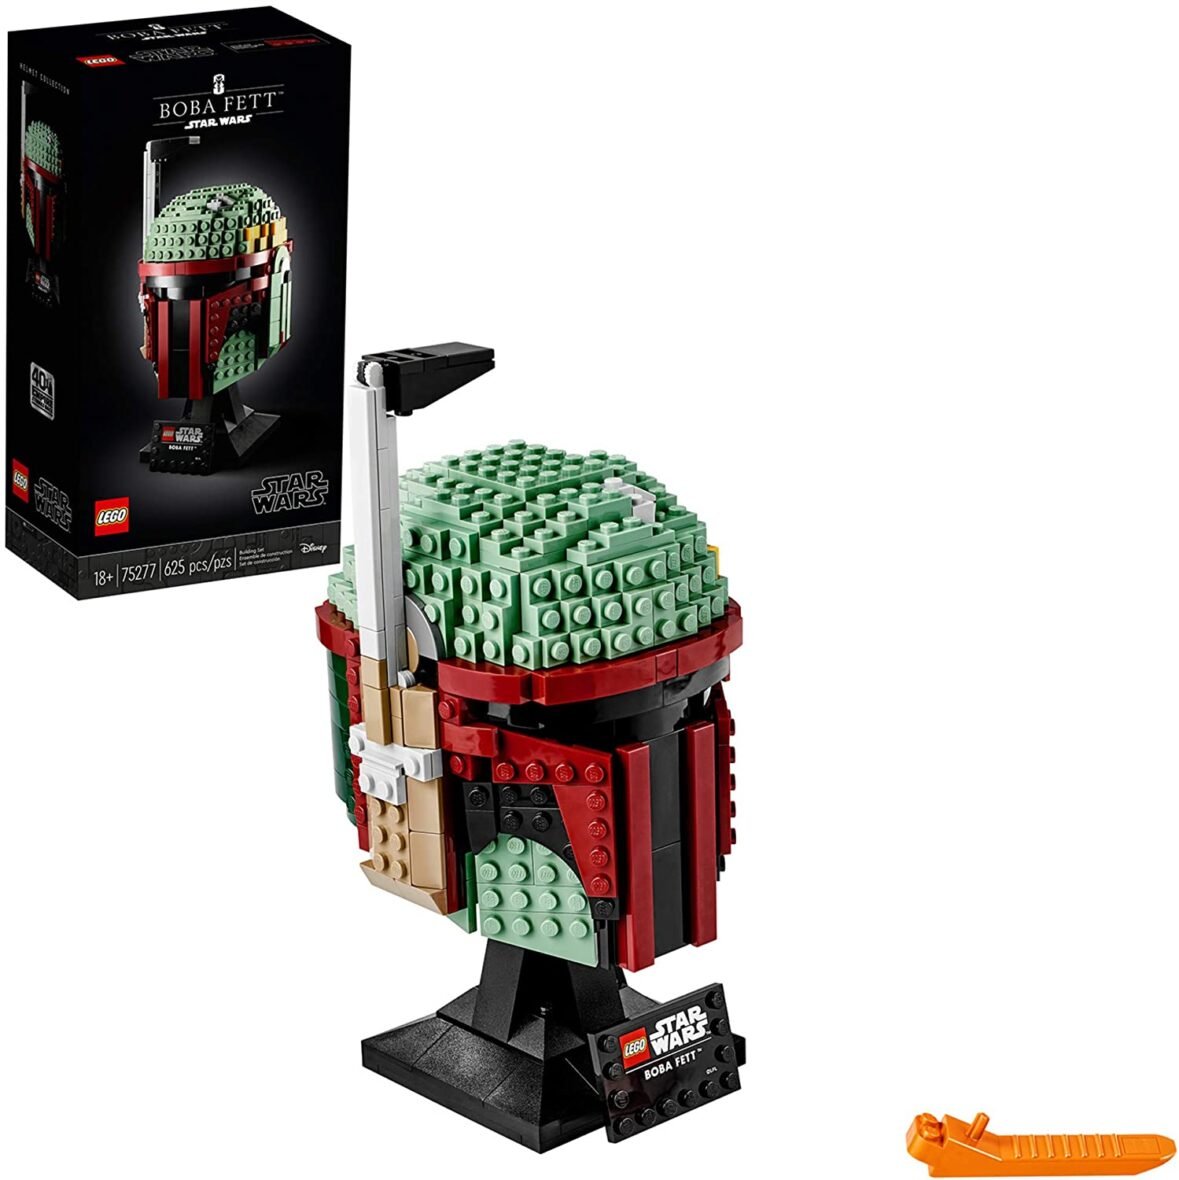 LEGO Star Wars Boba Fett Helmet 75277 Building Kit (625 Pieces)